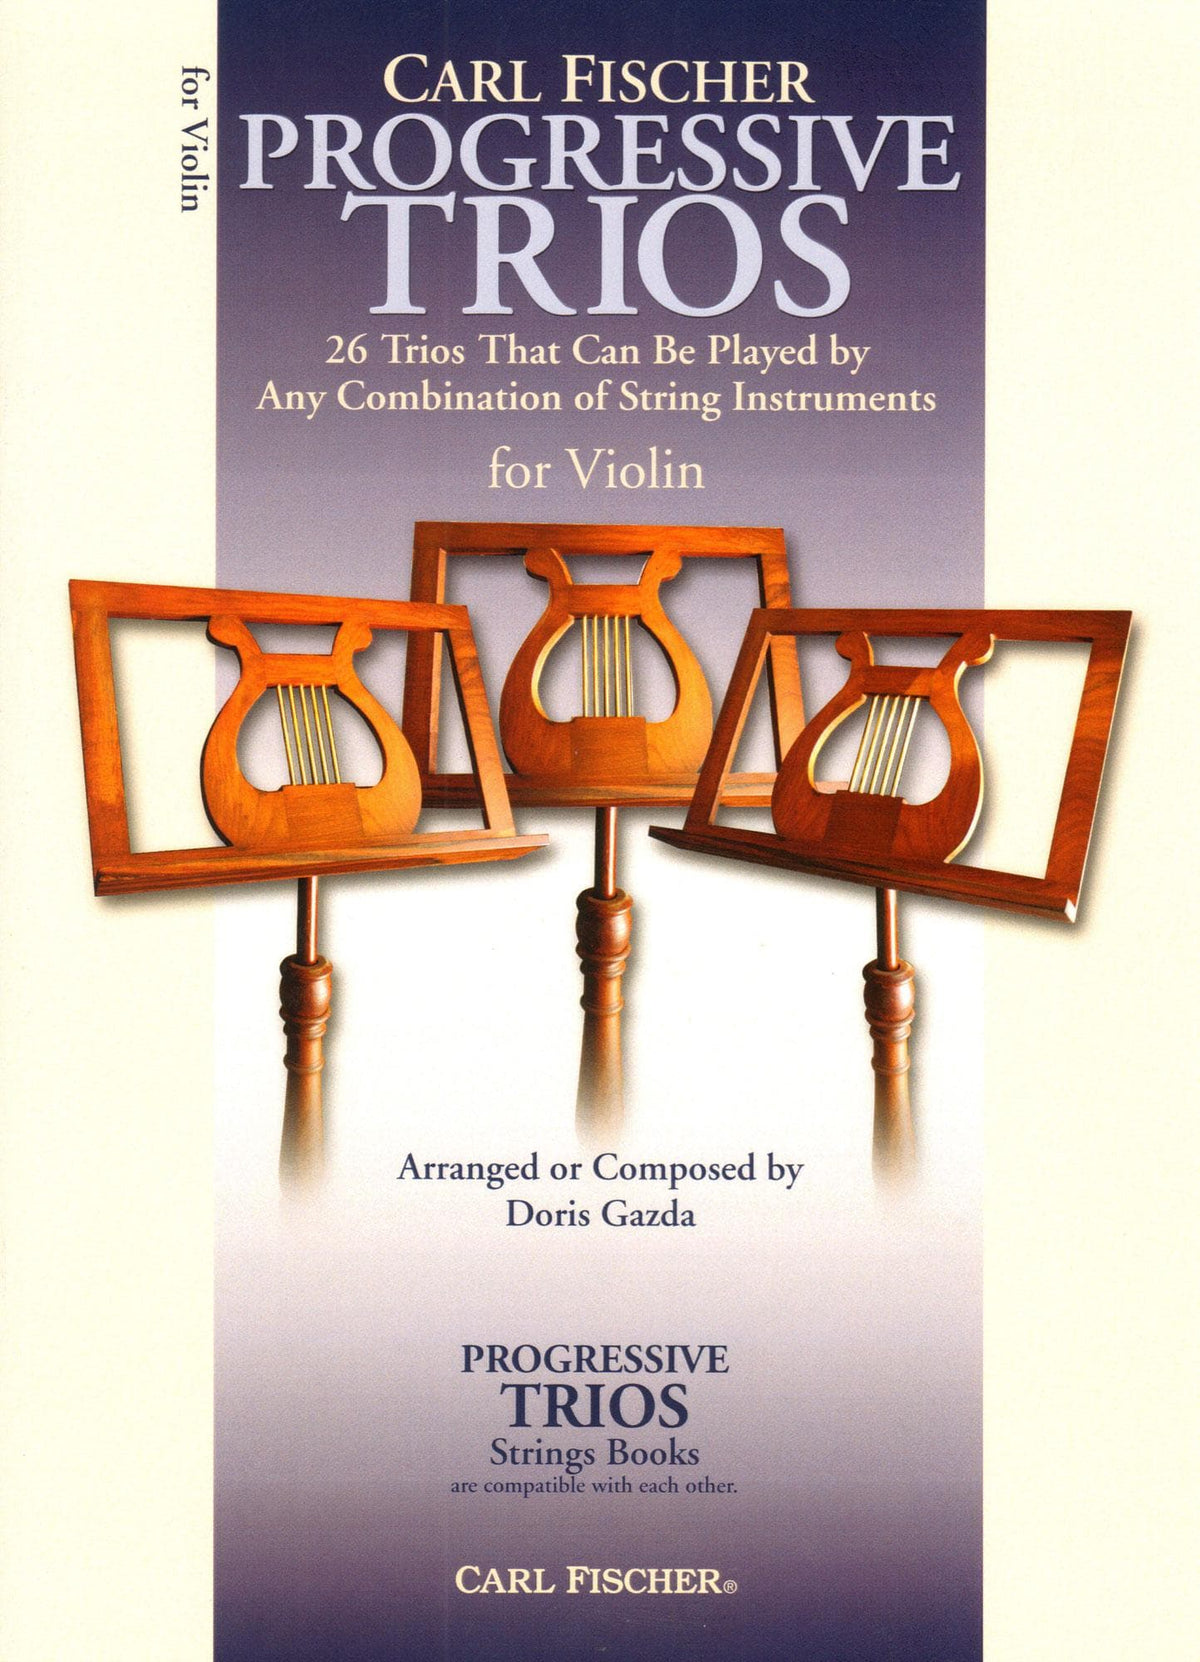 Progressive Trios for Violin - 26 Trios for Any Combination of Stringed Instruments - Arranged by Doris Gazda - Carl Fischer Publication